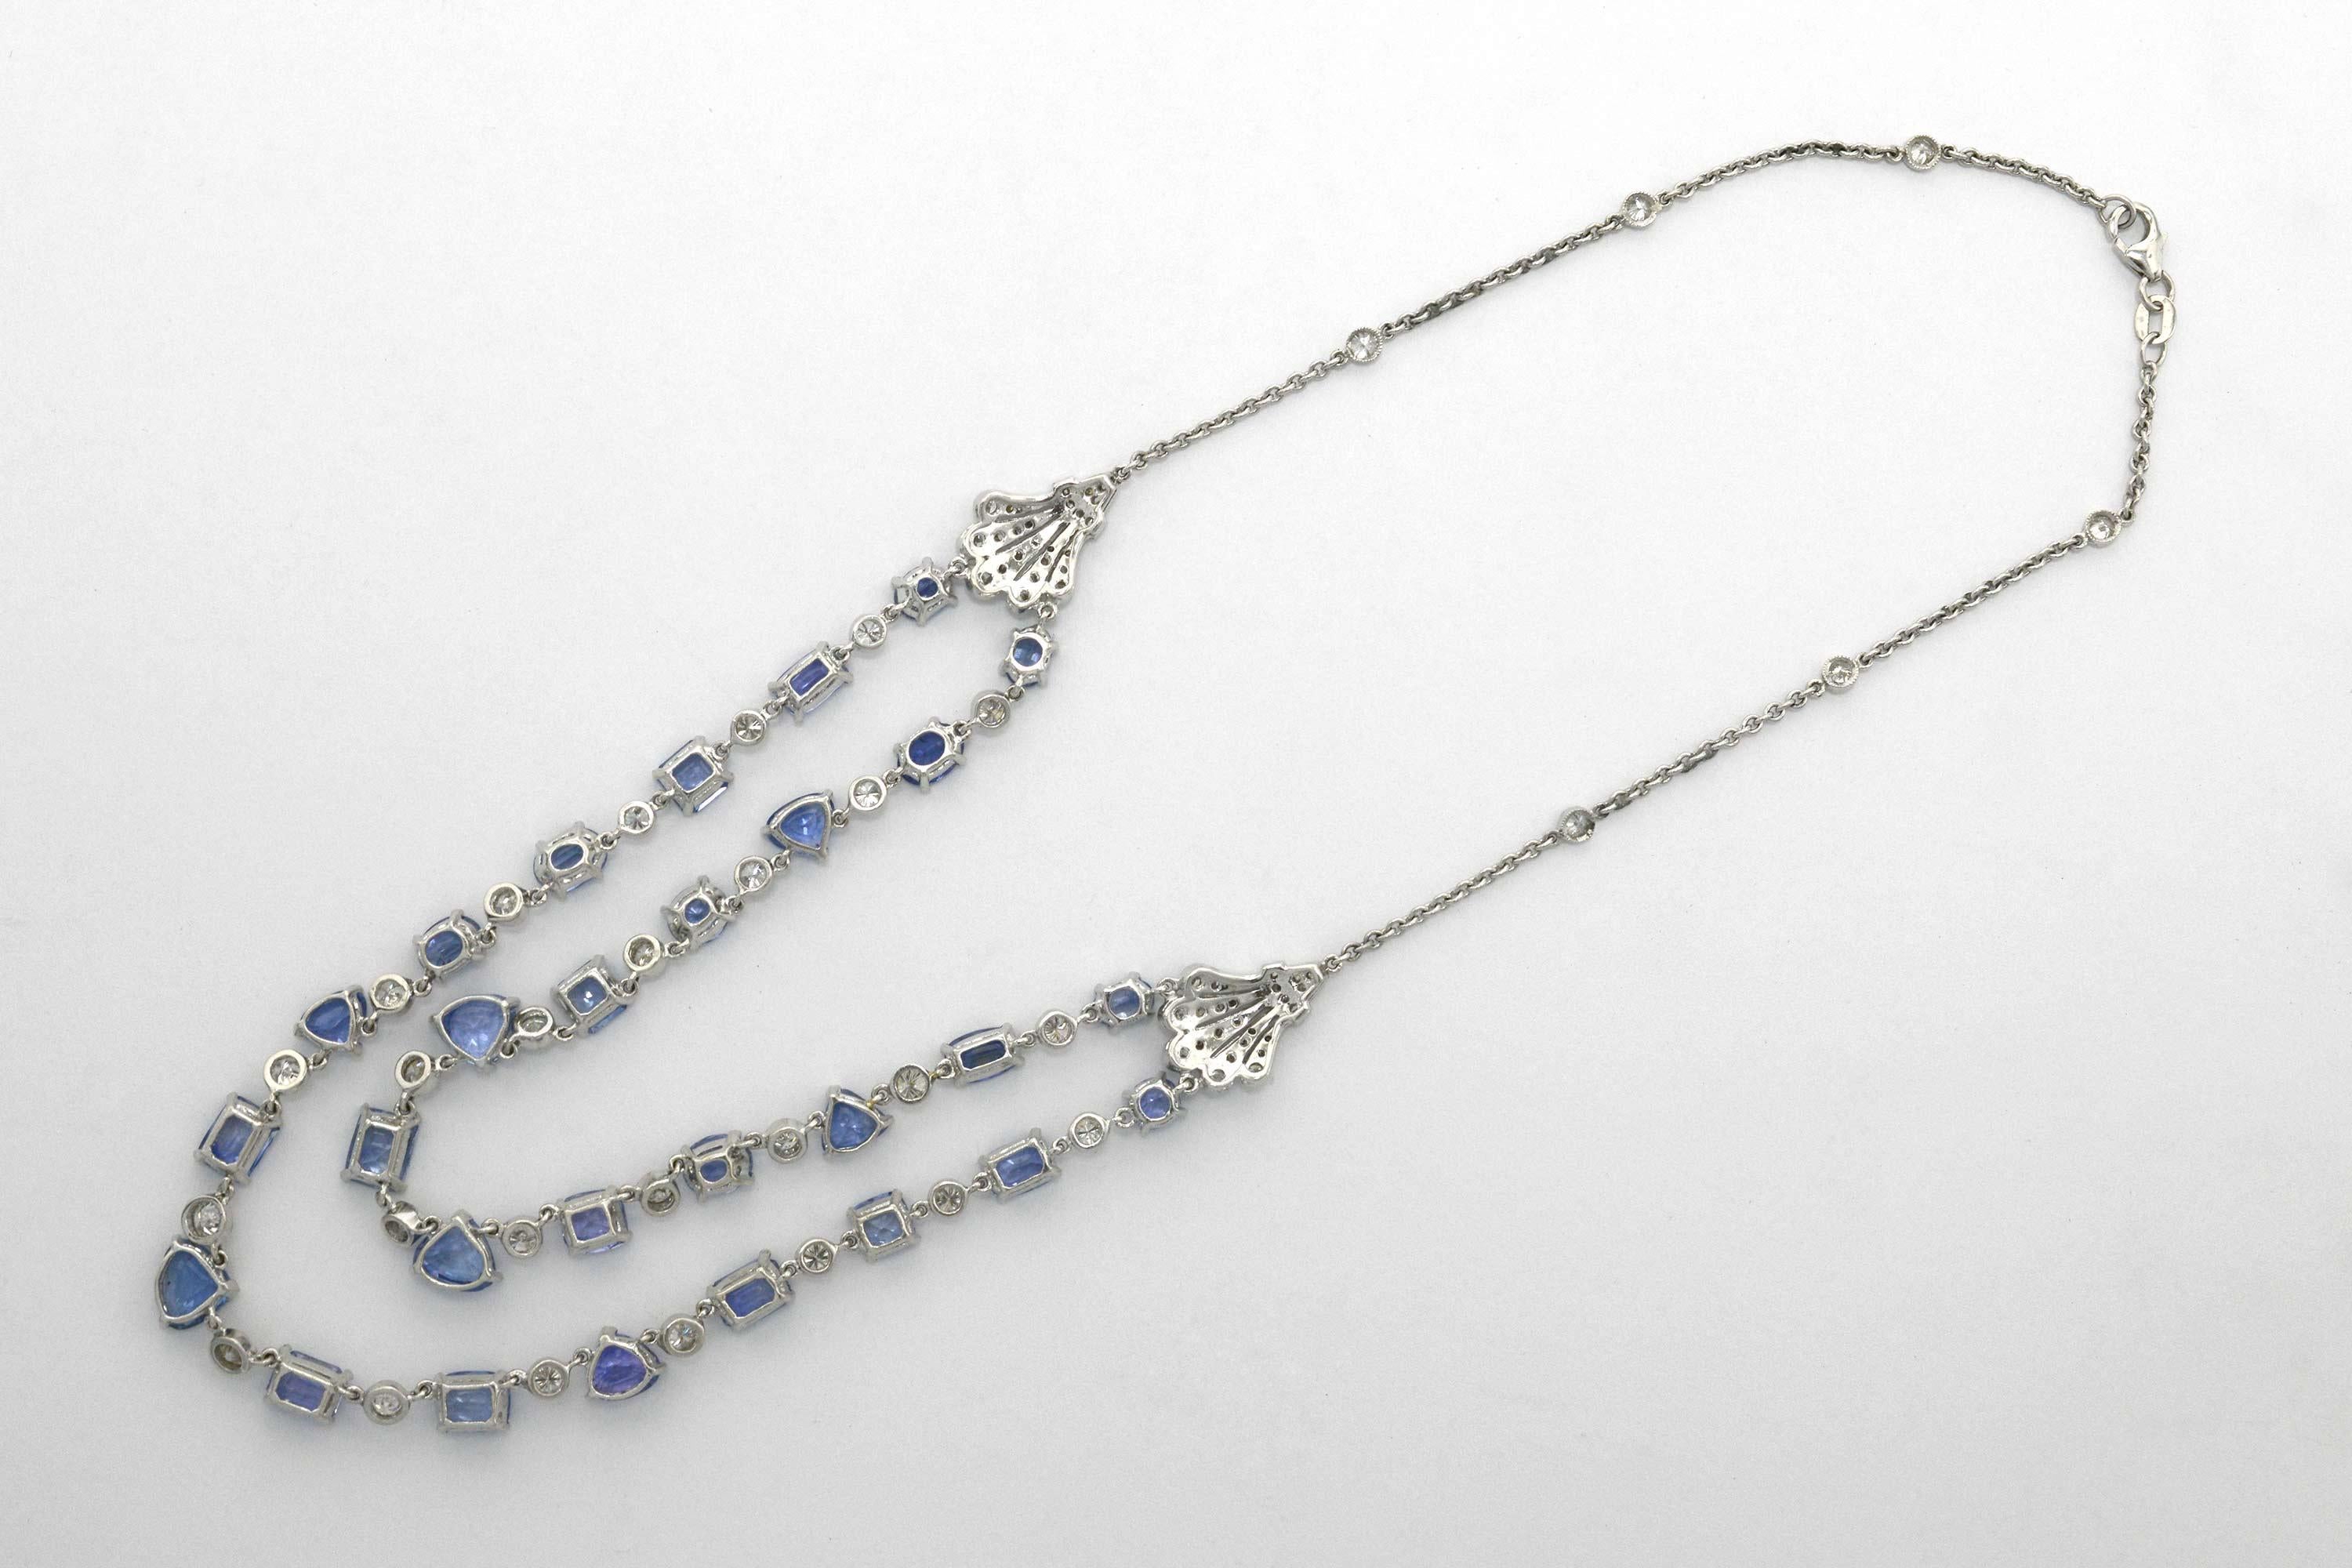 Oval Cut Art Deco Style 40 Carat Certified Natural Blue Sapphire Diamond Bib Necklace